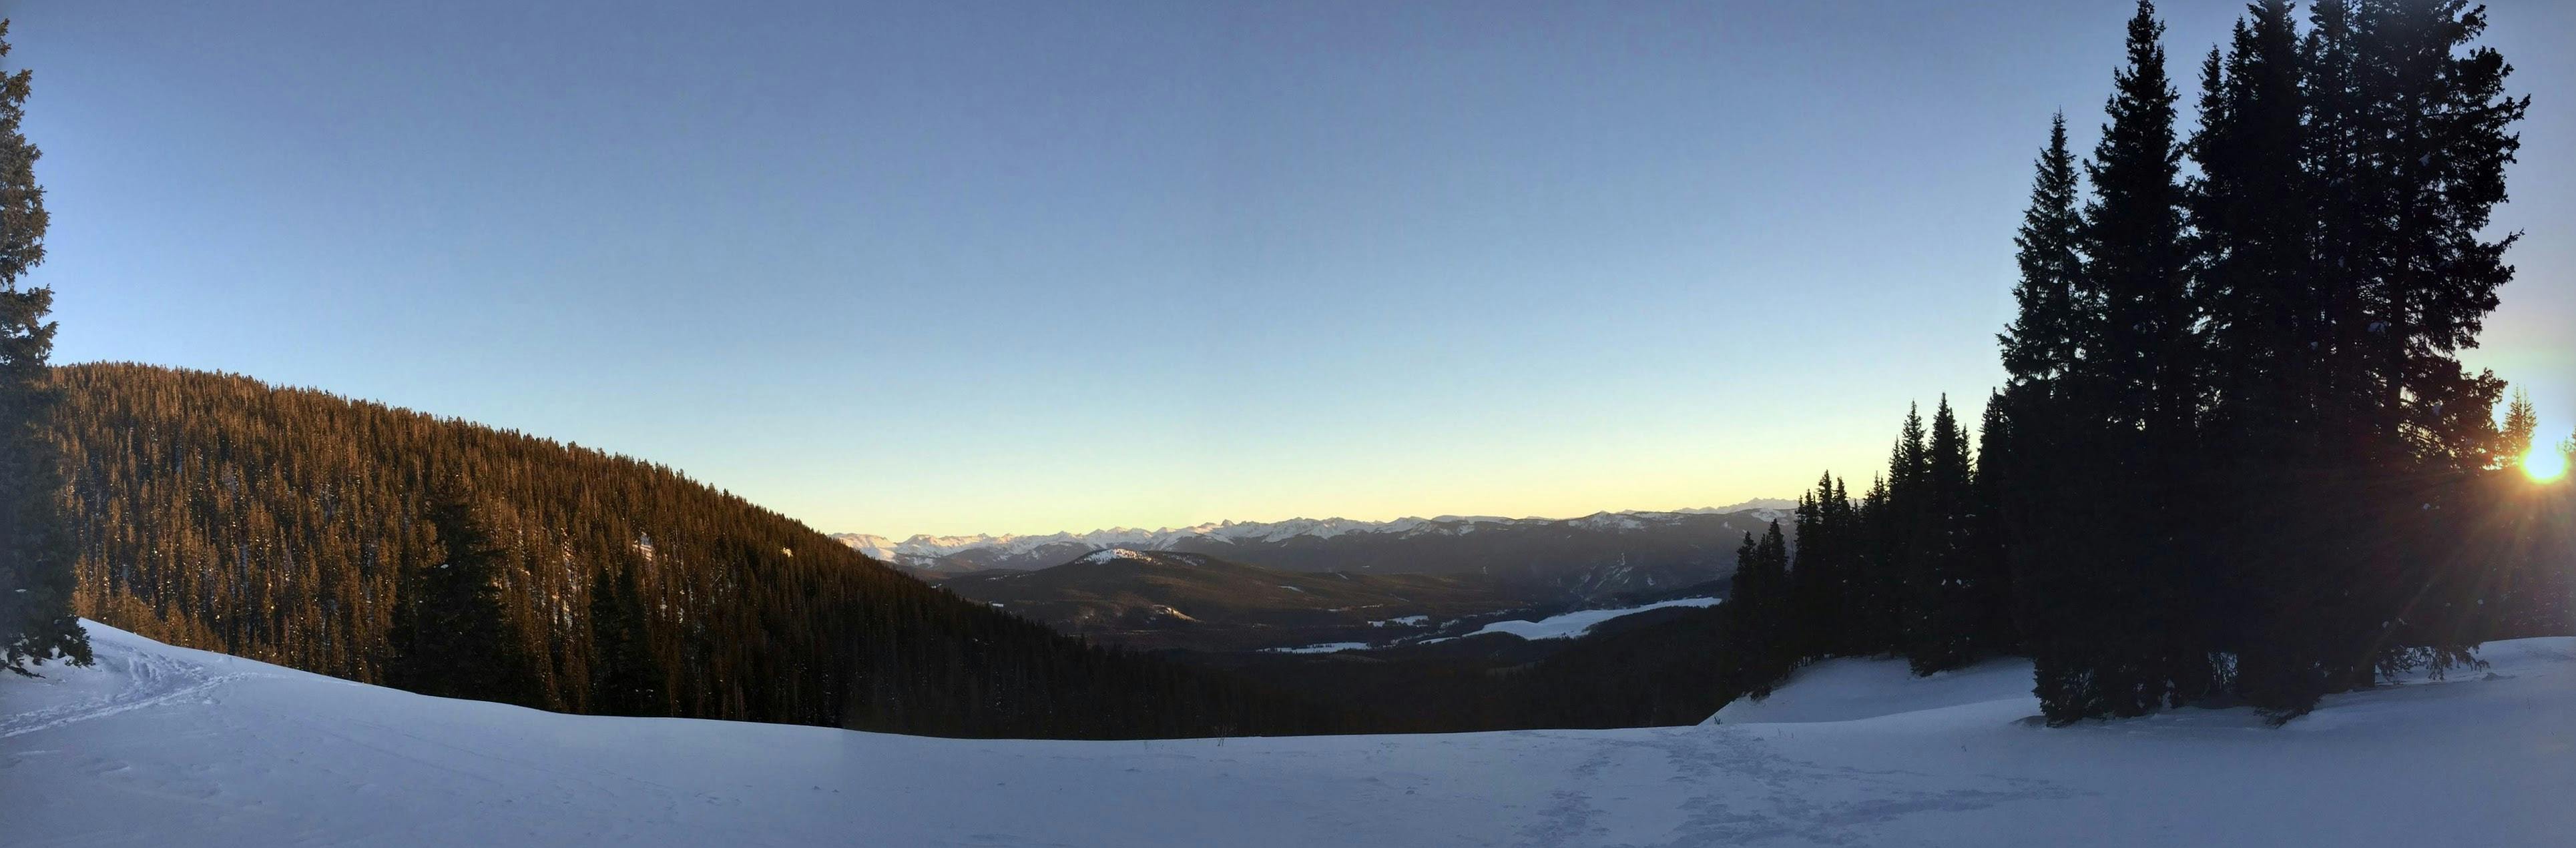 Free stock photo of mountains, snow, sunset